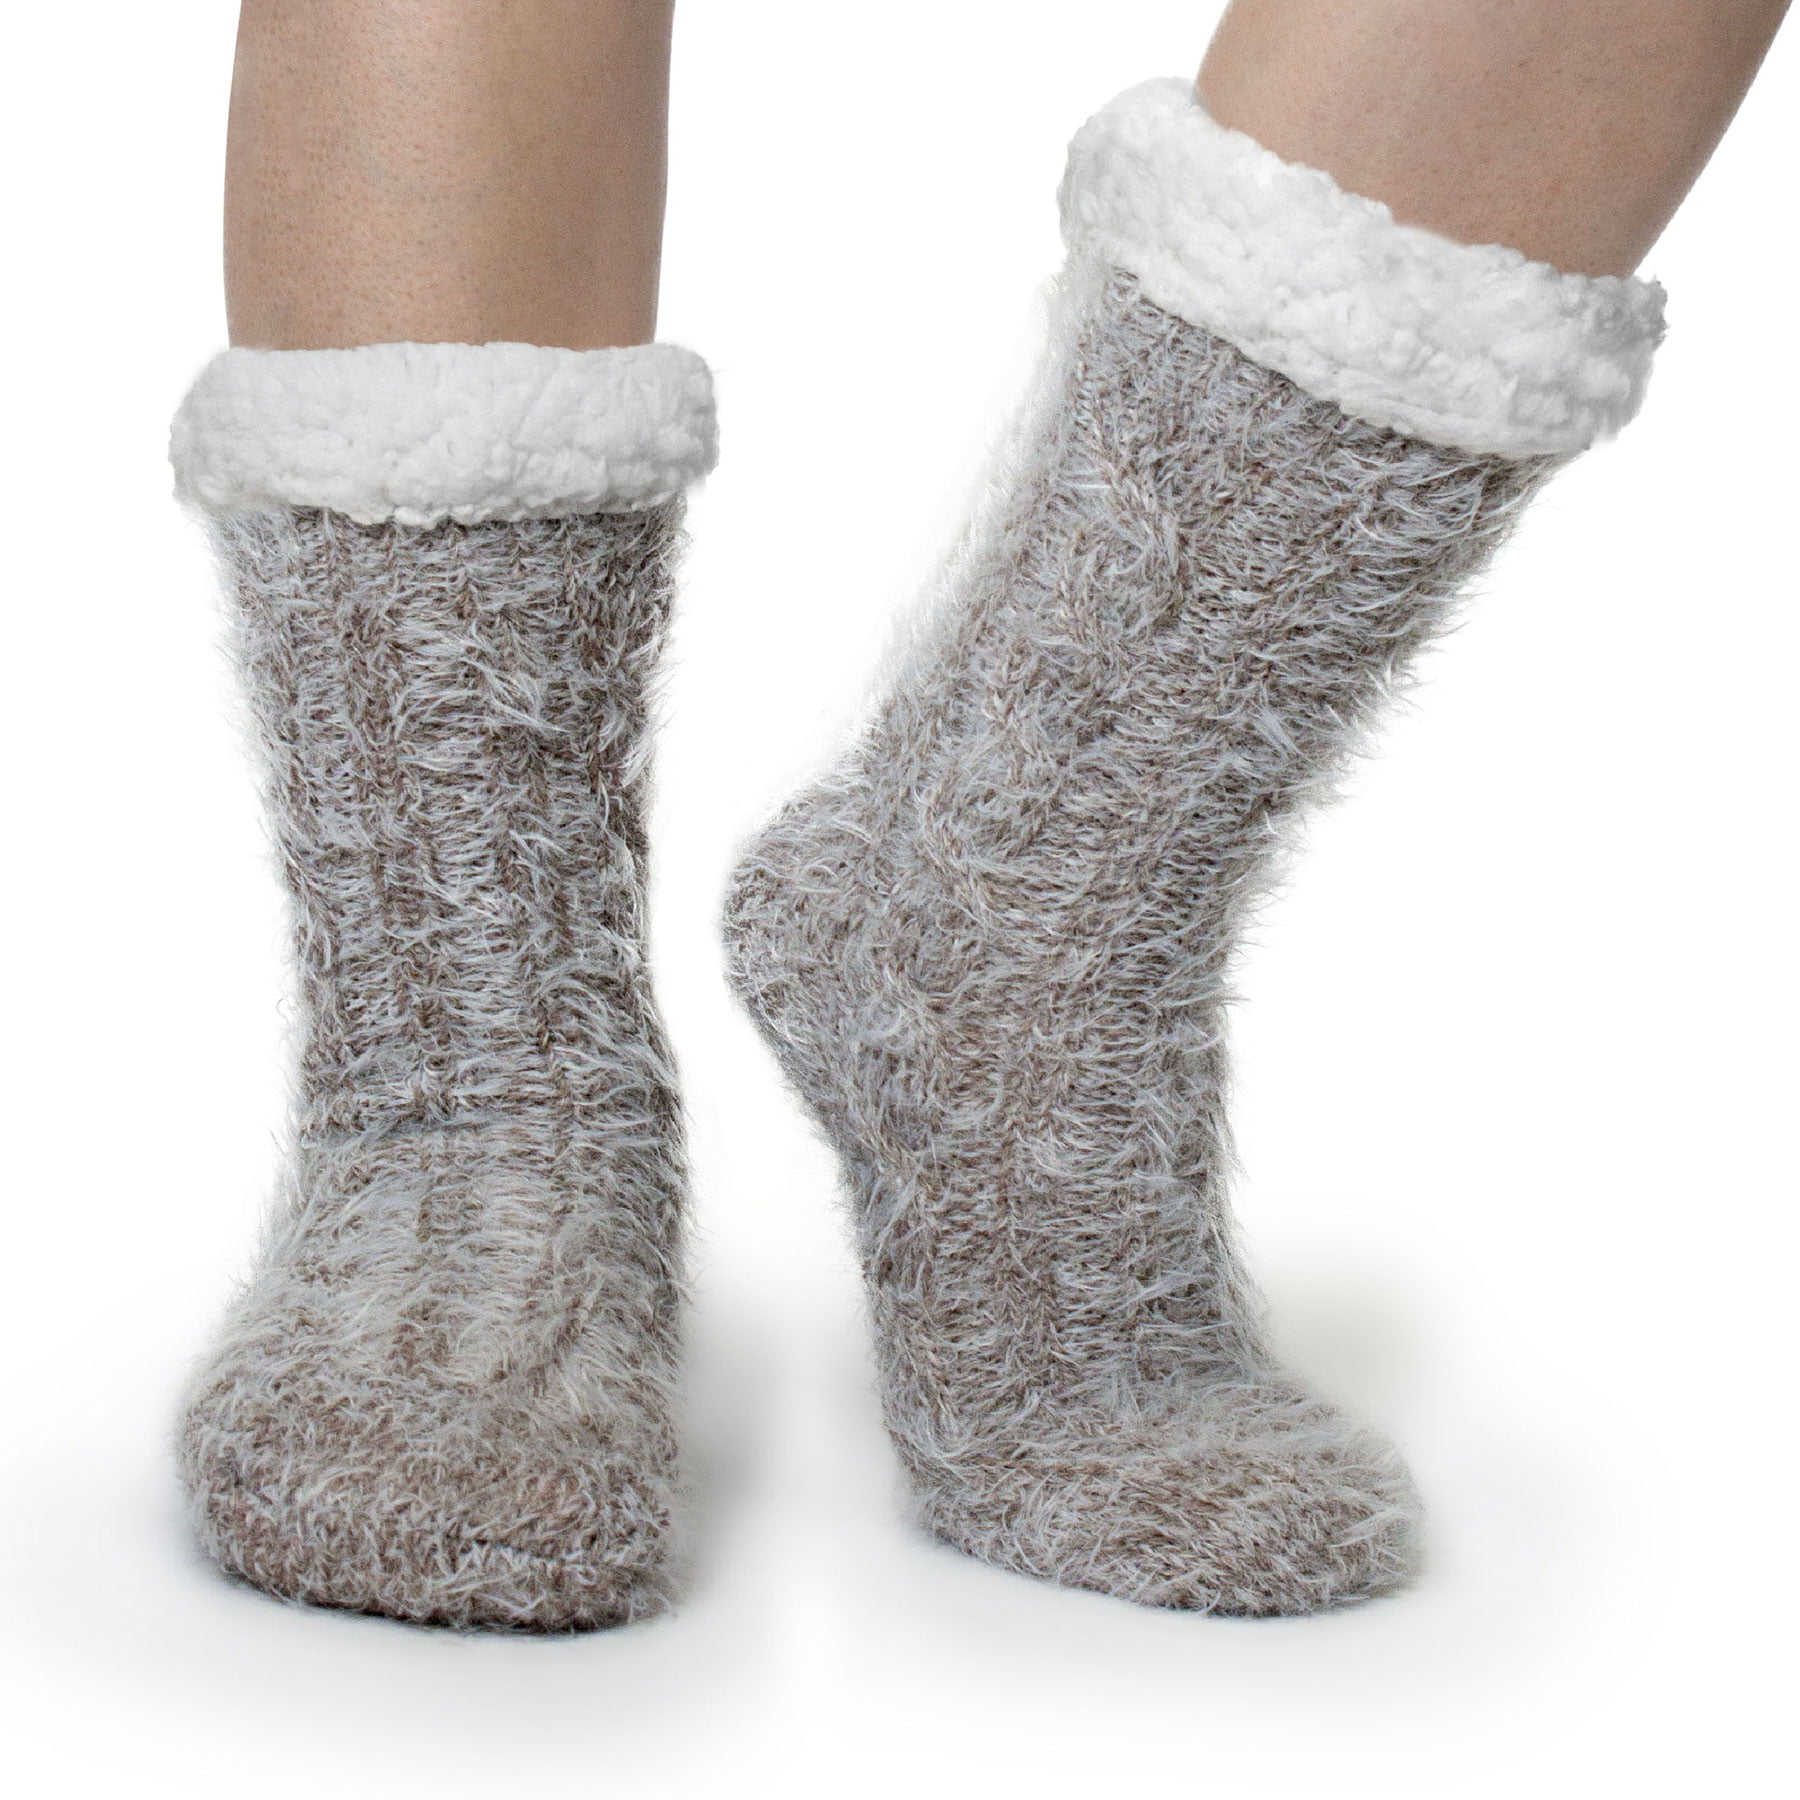 house slippers Soft and cozy women's size 7 slipper socks